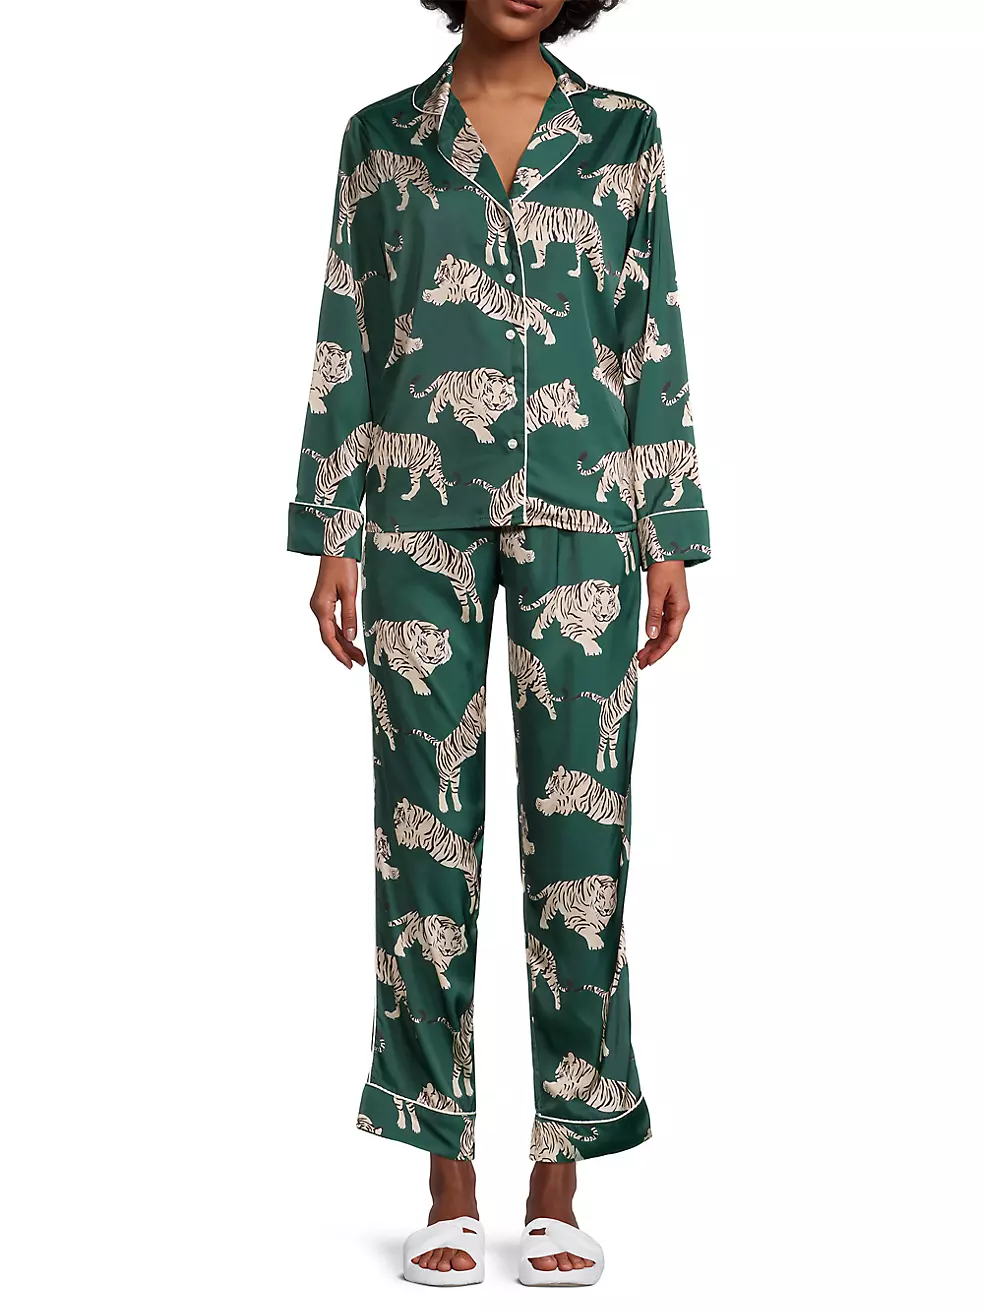 Womens Sleepwear Long Sleeve Collar Shirt and Long Pant 2-Piece Pajama Set  - Tiger Animal Print